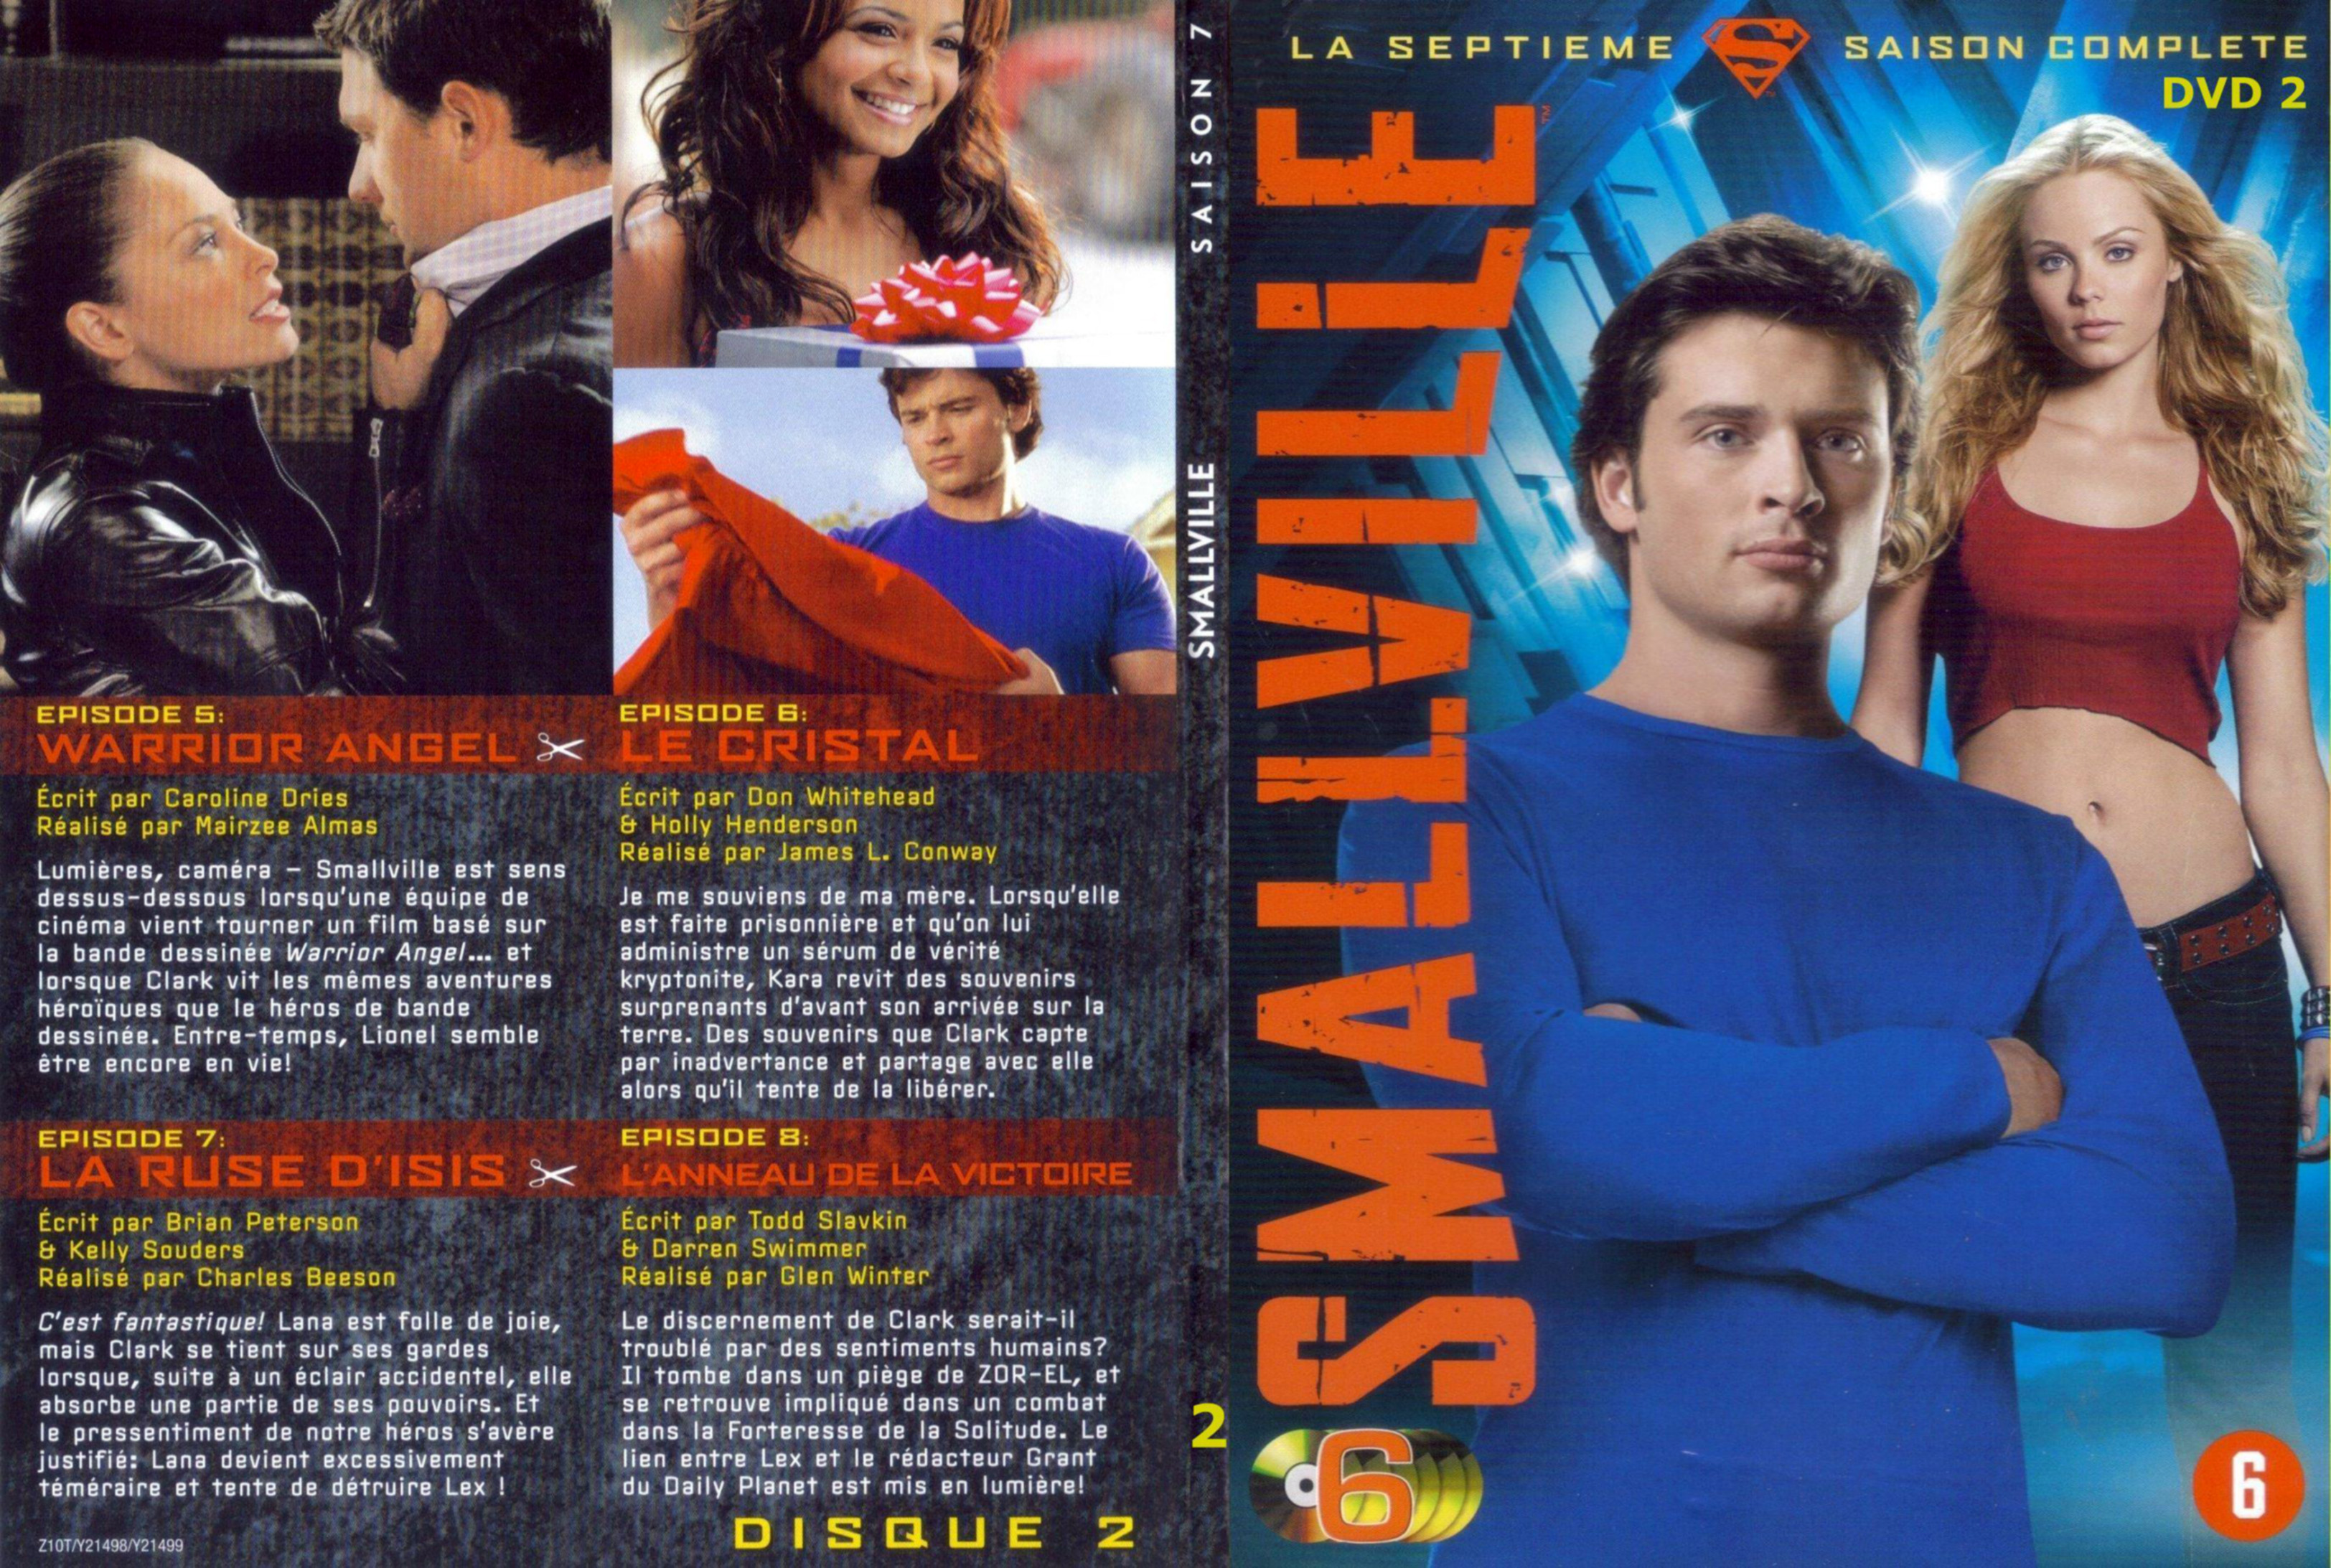 Jaquette DVD Smallville saison 7 DVD 2